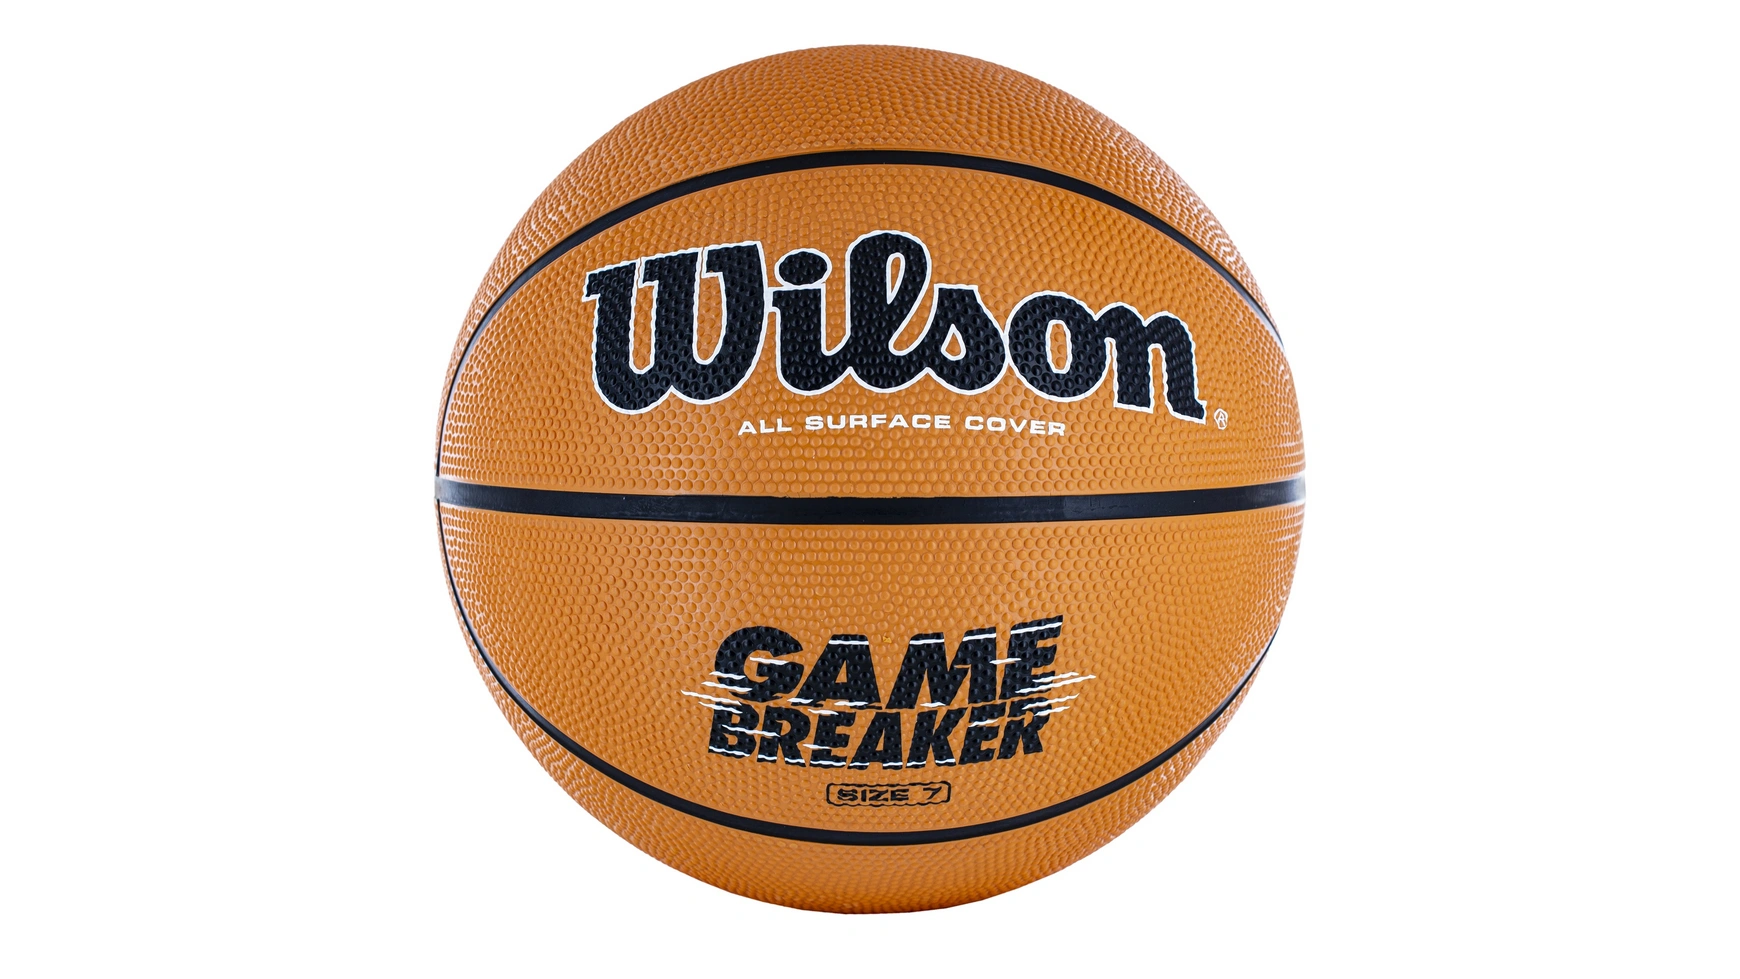 Wilson Basketball Gamebreaker, размер 7 jrs go skiing basketball indoor outdoor 29 5 basketball size 7 streetball valentine s day gift